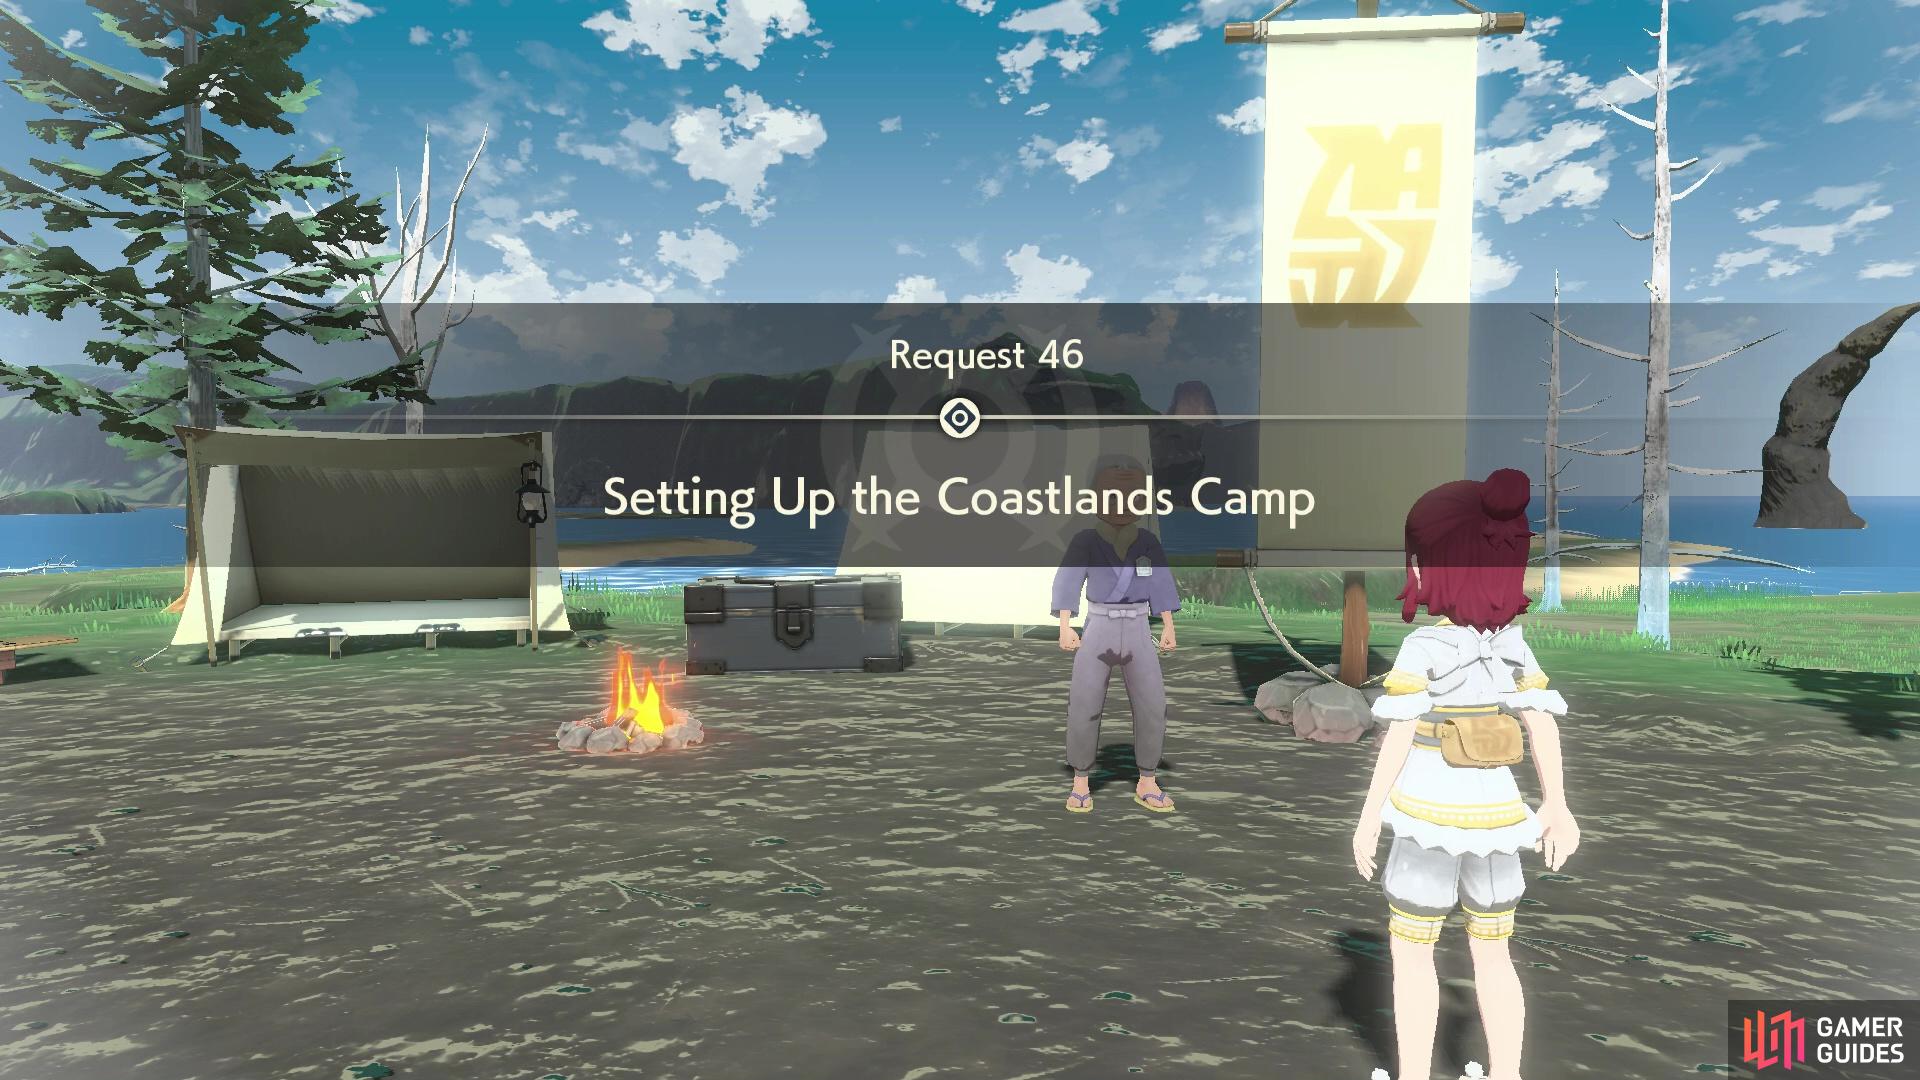 Request 46: Setting Up the Coastlands Camp.